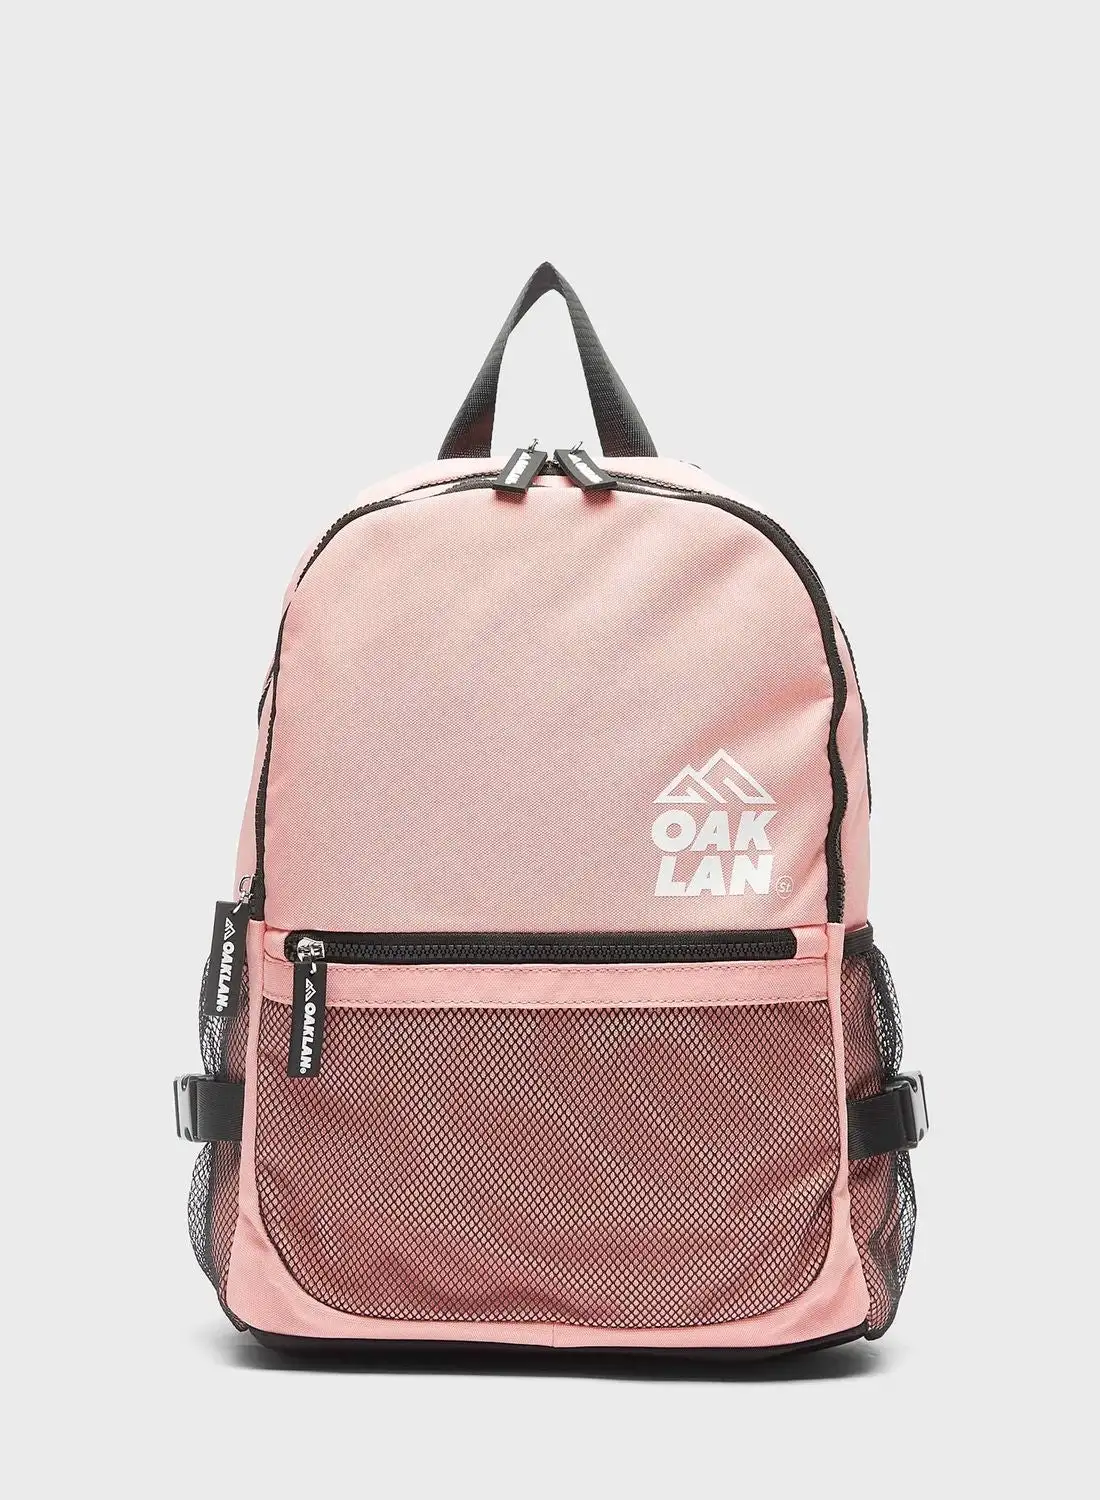 Oaklan by Shoexpress Kids Printed Backpack